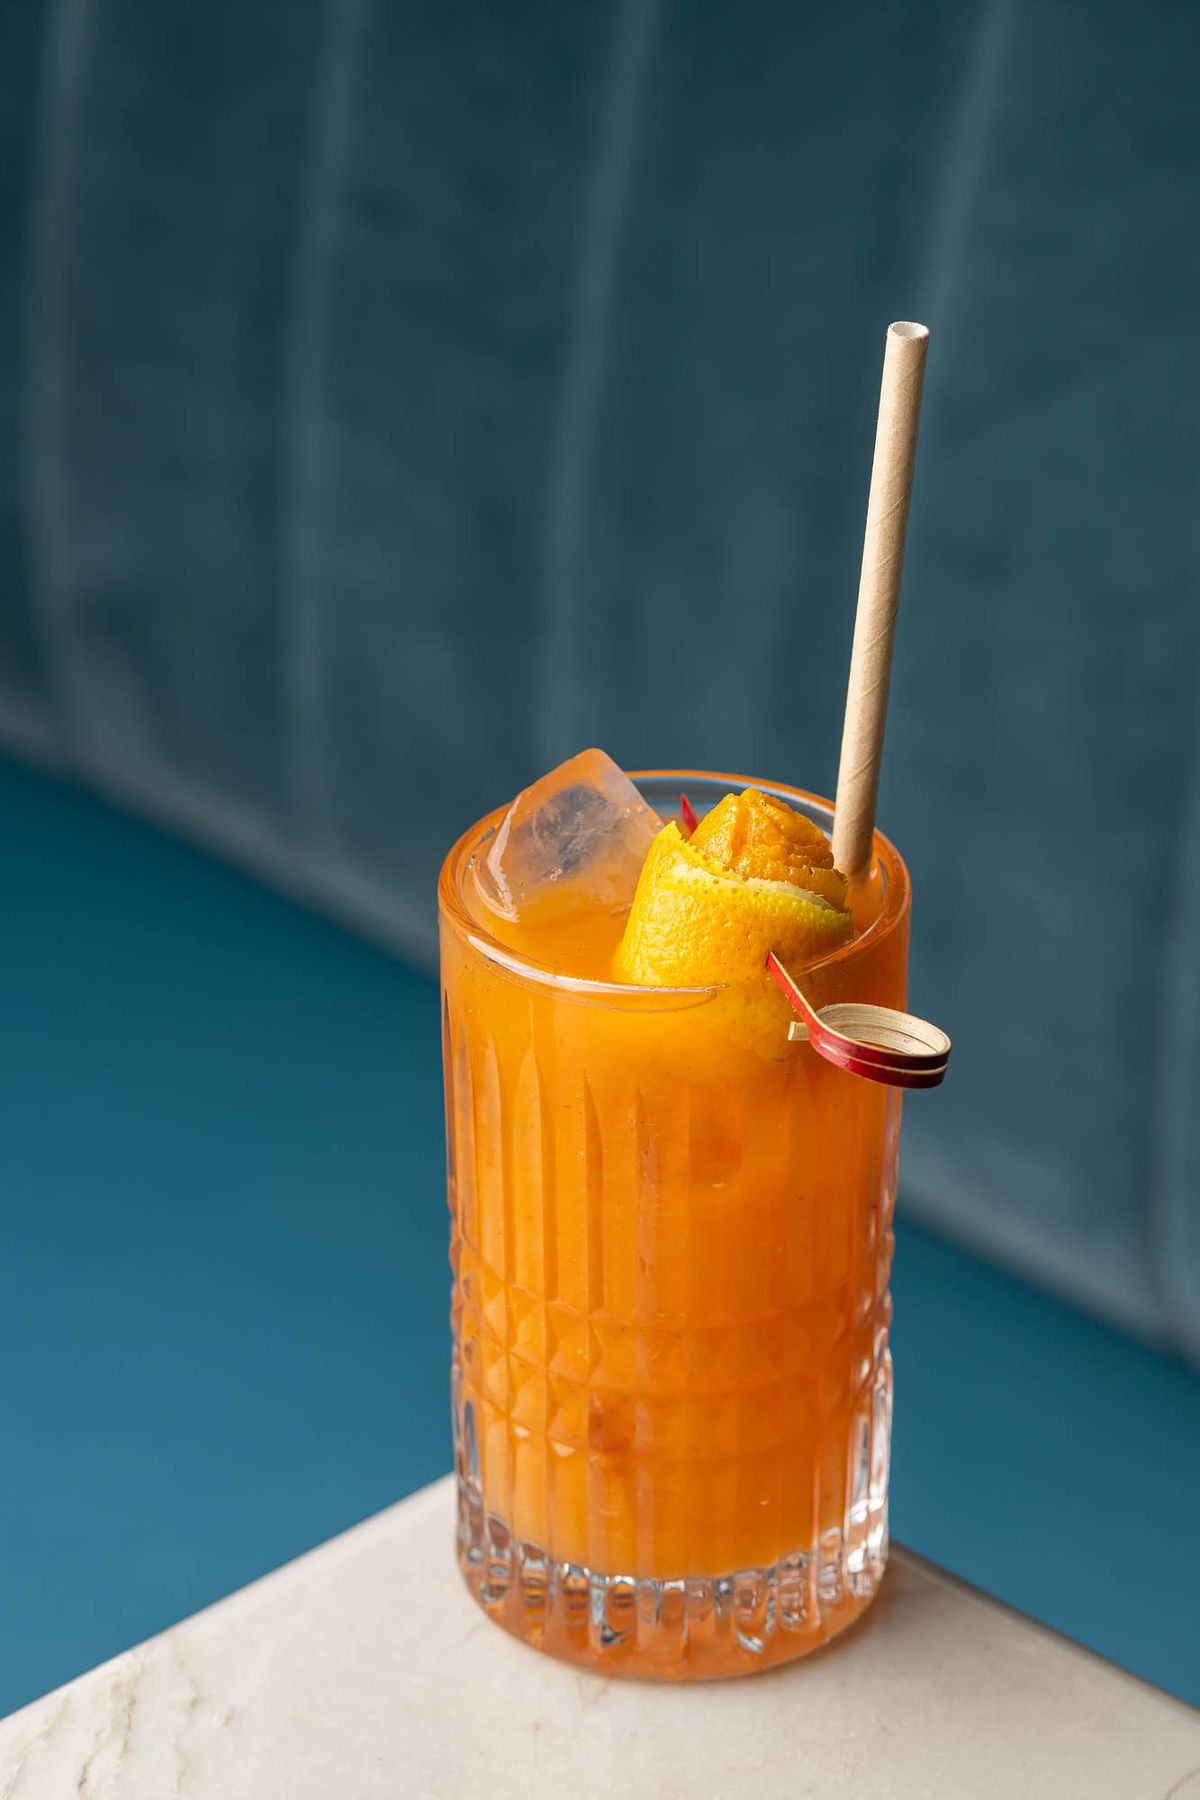 The orange Hera Pheri cocktail with mezcal, orange liqueur, spicy guava chutney, and pink salt at Baar Baar.